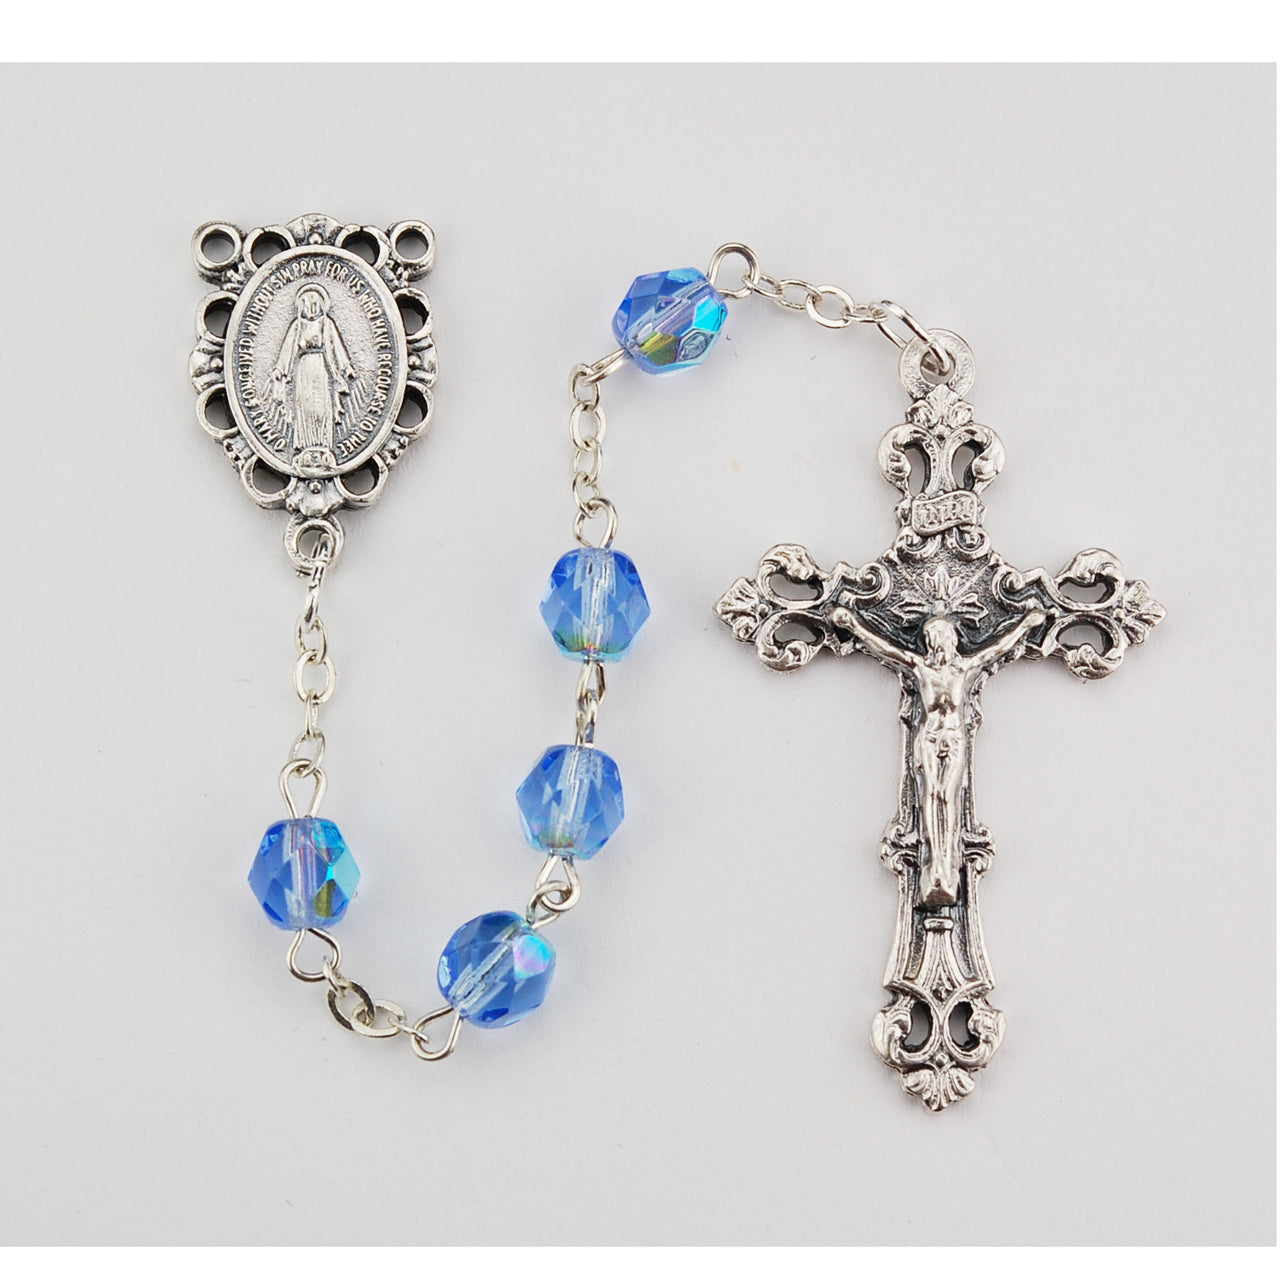 Birthstone Rosary - 6mm - McVan - Chiarelli's Religious Goods & Church Supply